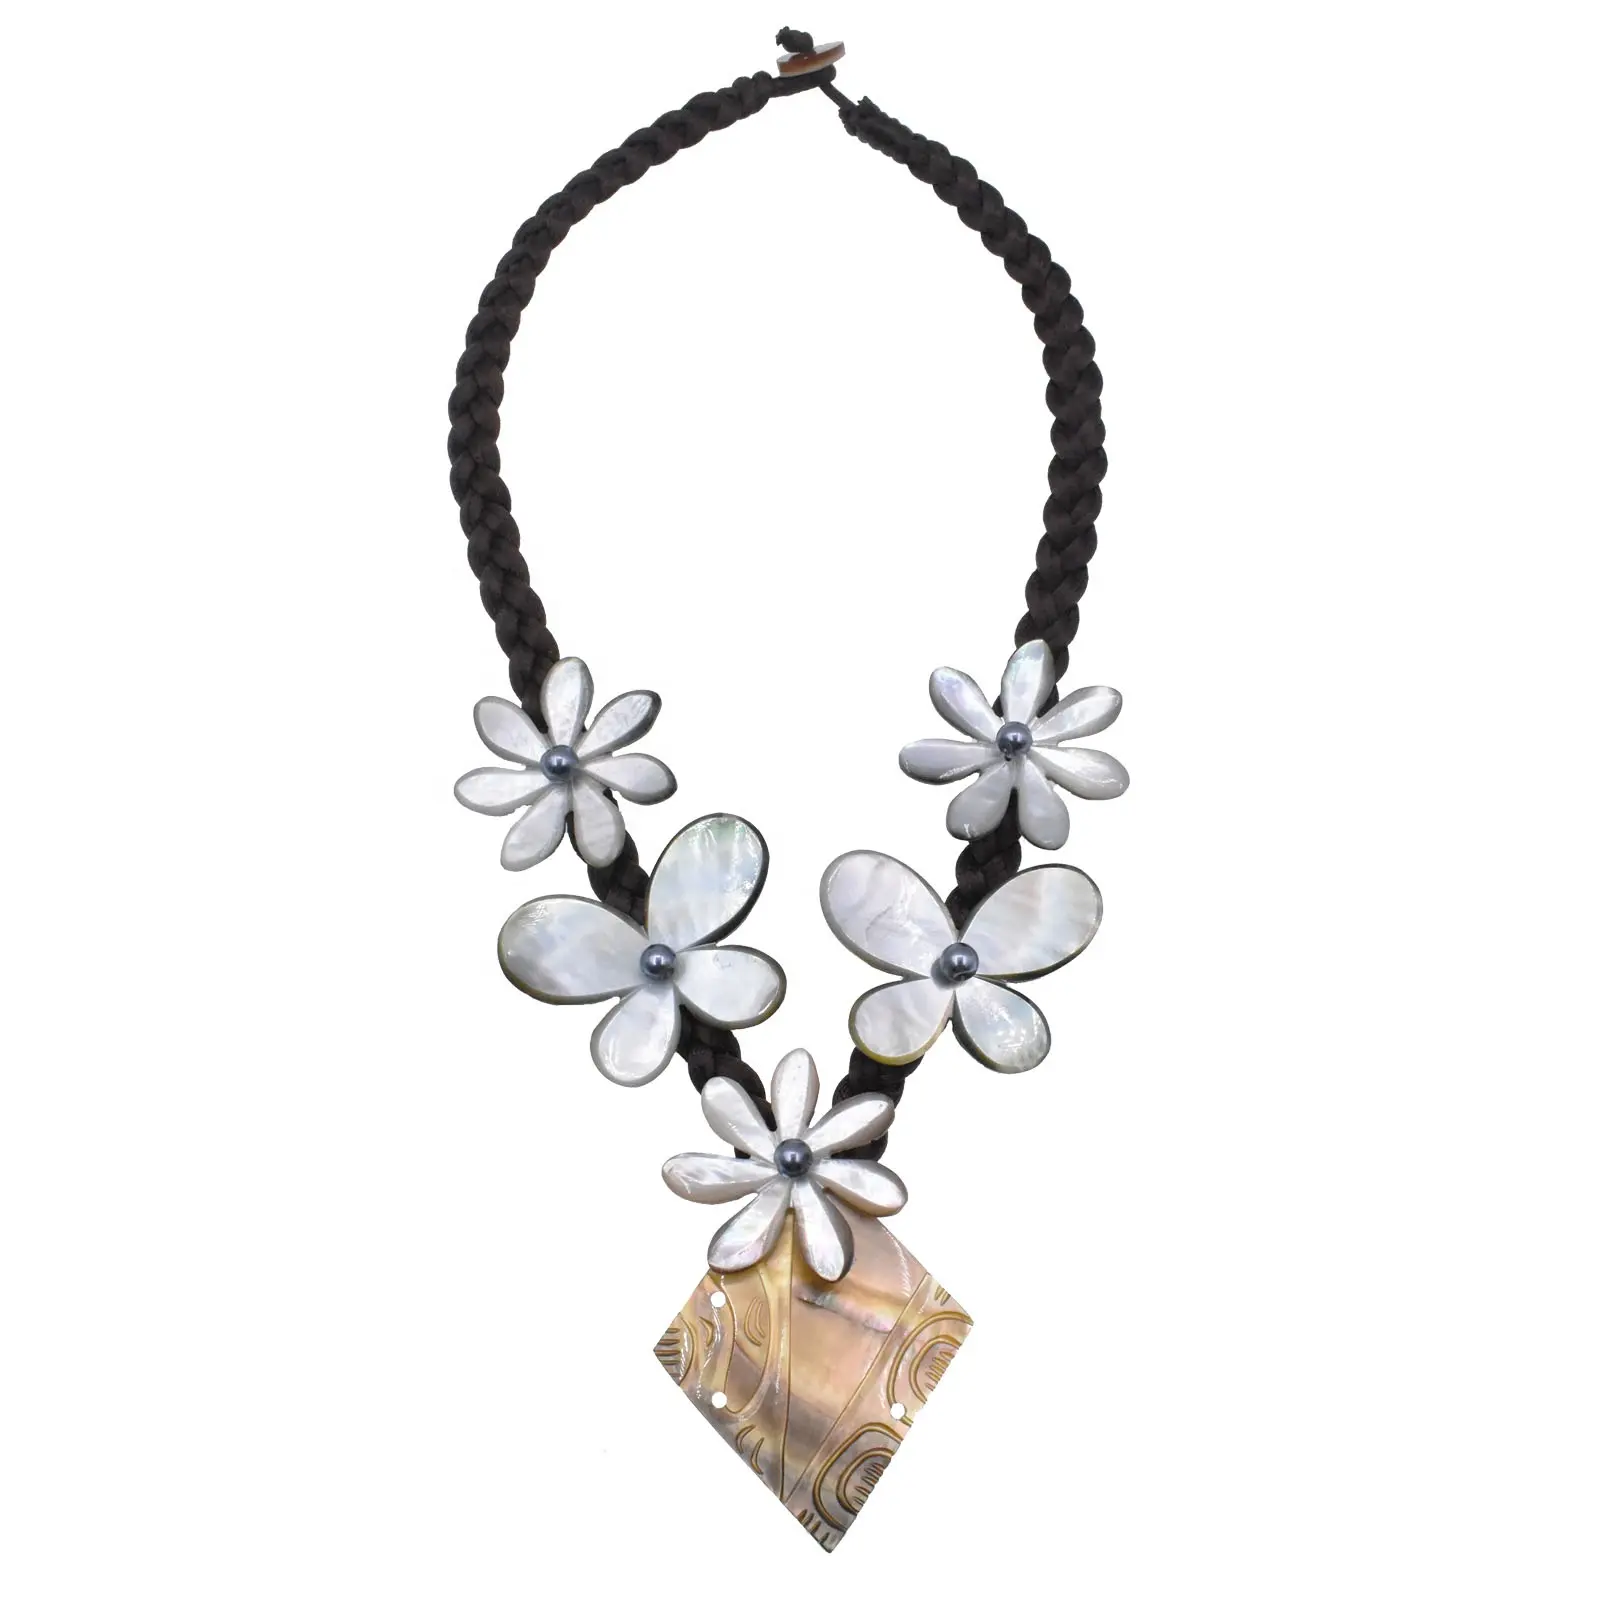 Hawaiian Fashion Jewelry Black Mother Of Pearl Flower Necklace Handmade Island Style Jewelry on Braided Cord